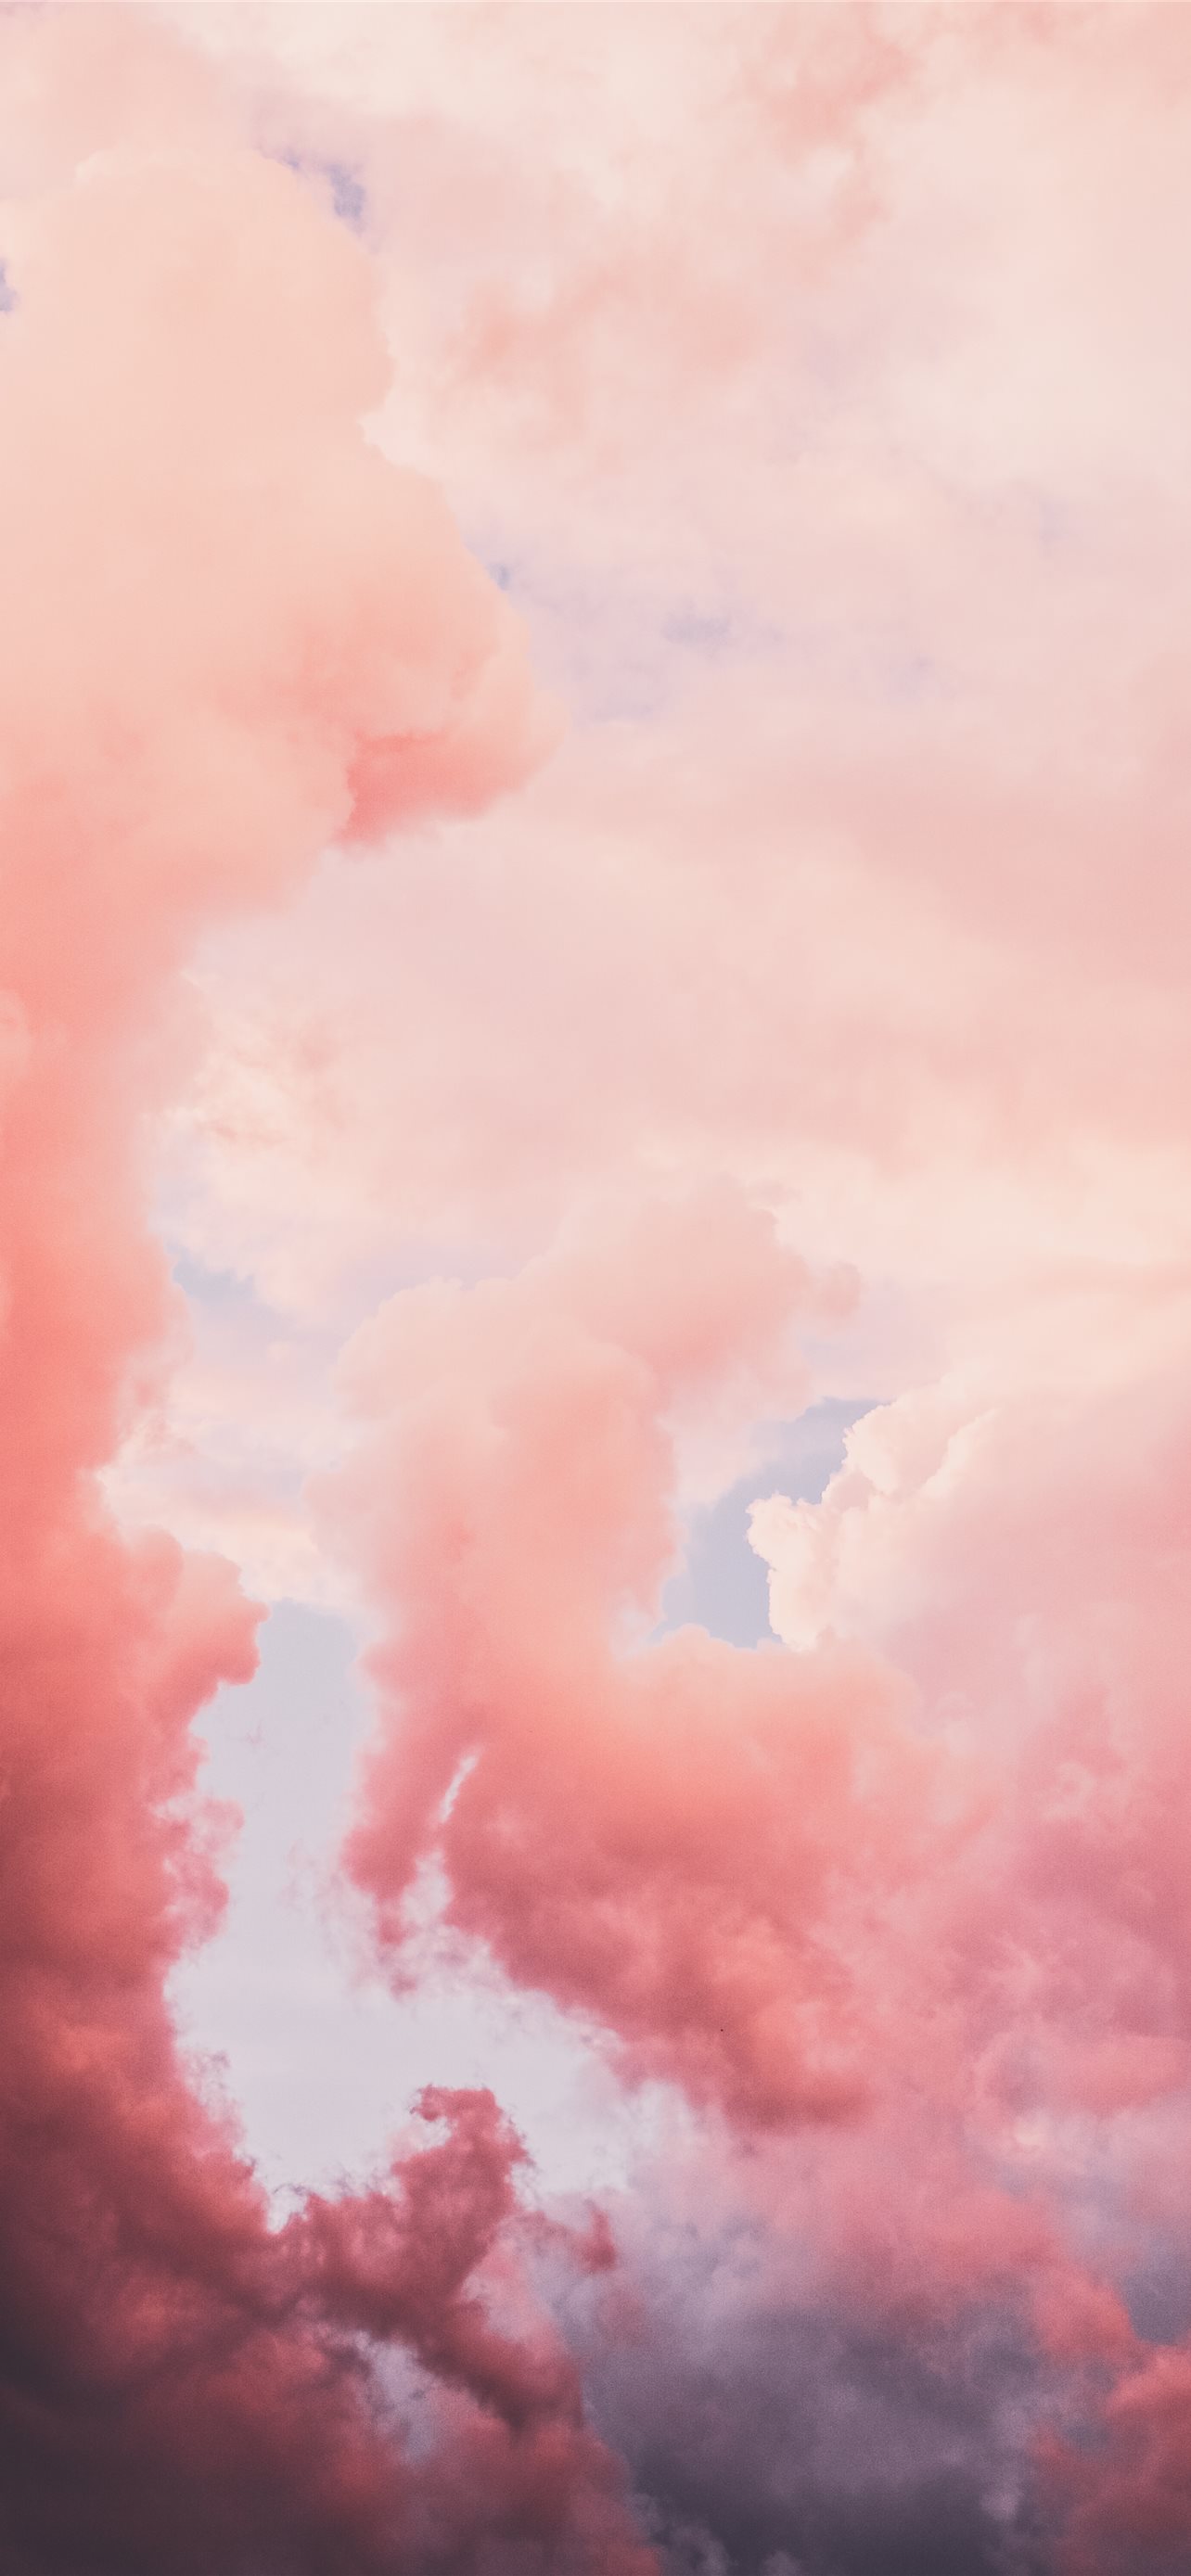 Brown Clouds iPhone Wallpaper